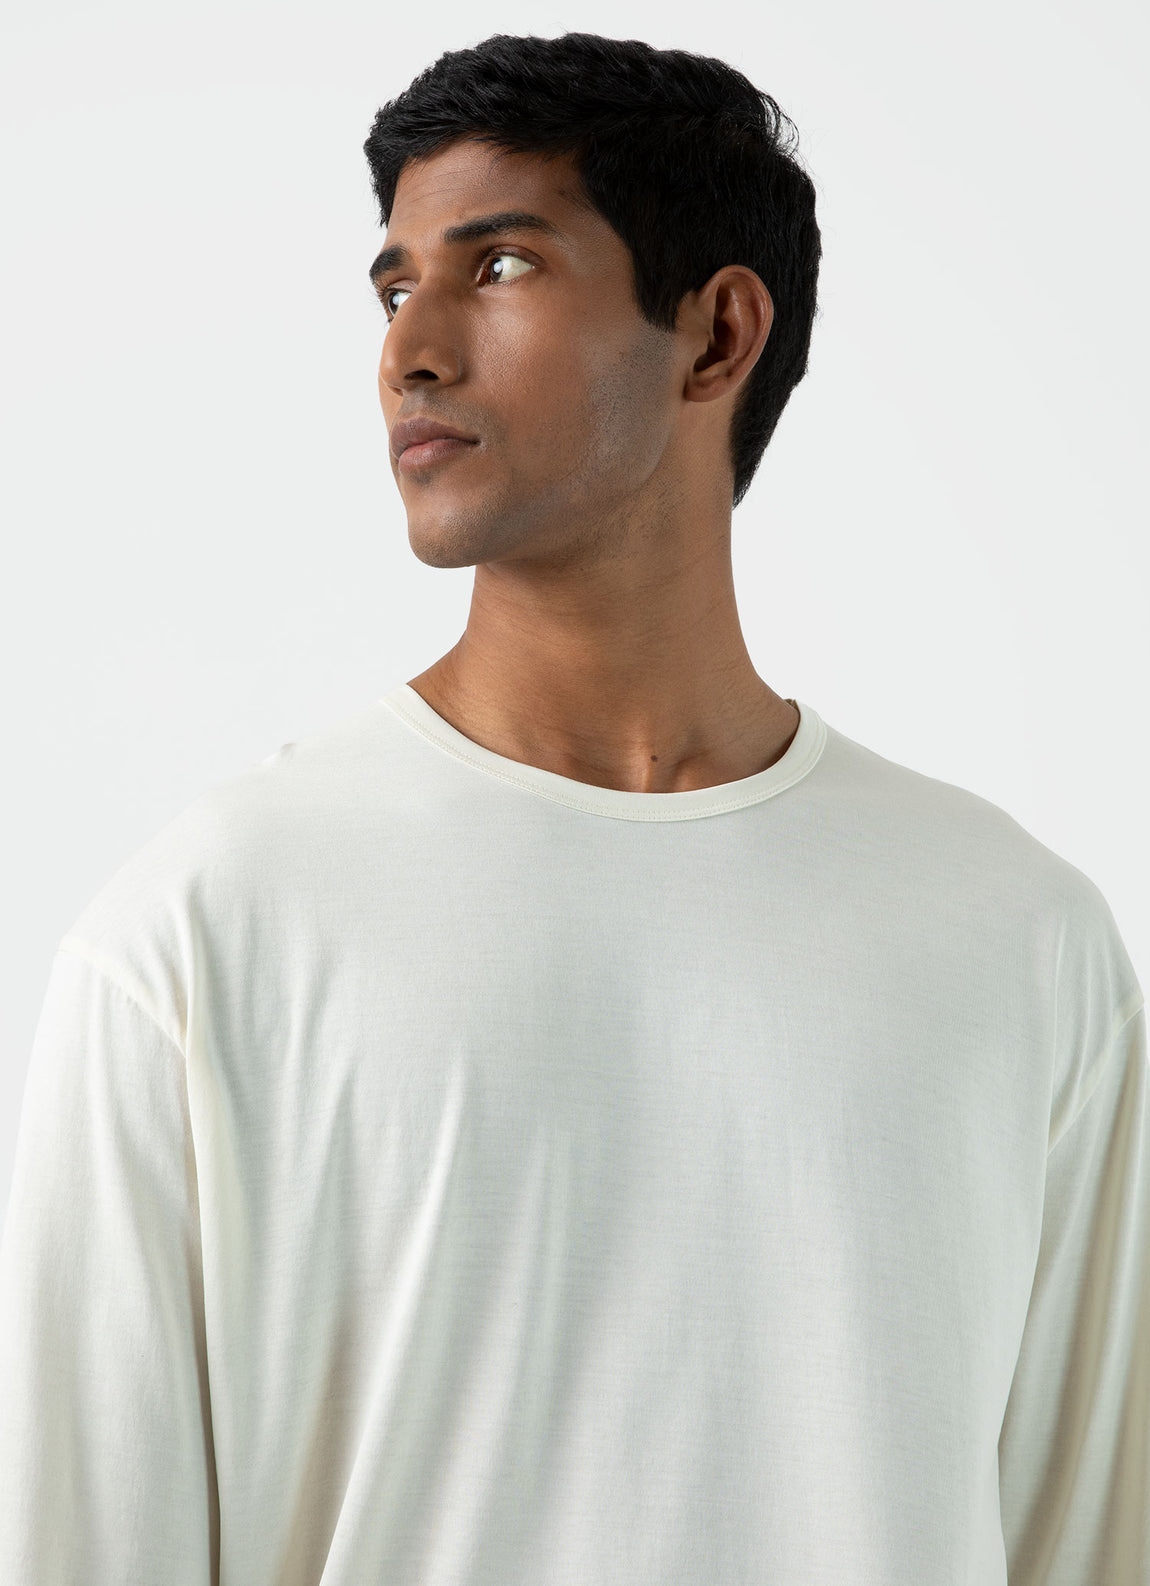 Men's Sunspel x Nigel Cabourn Long Sleeve T-shirt in Stone White